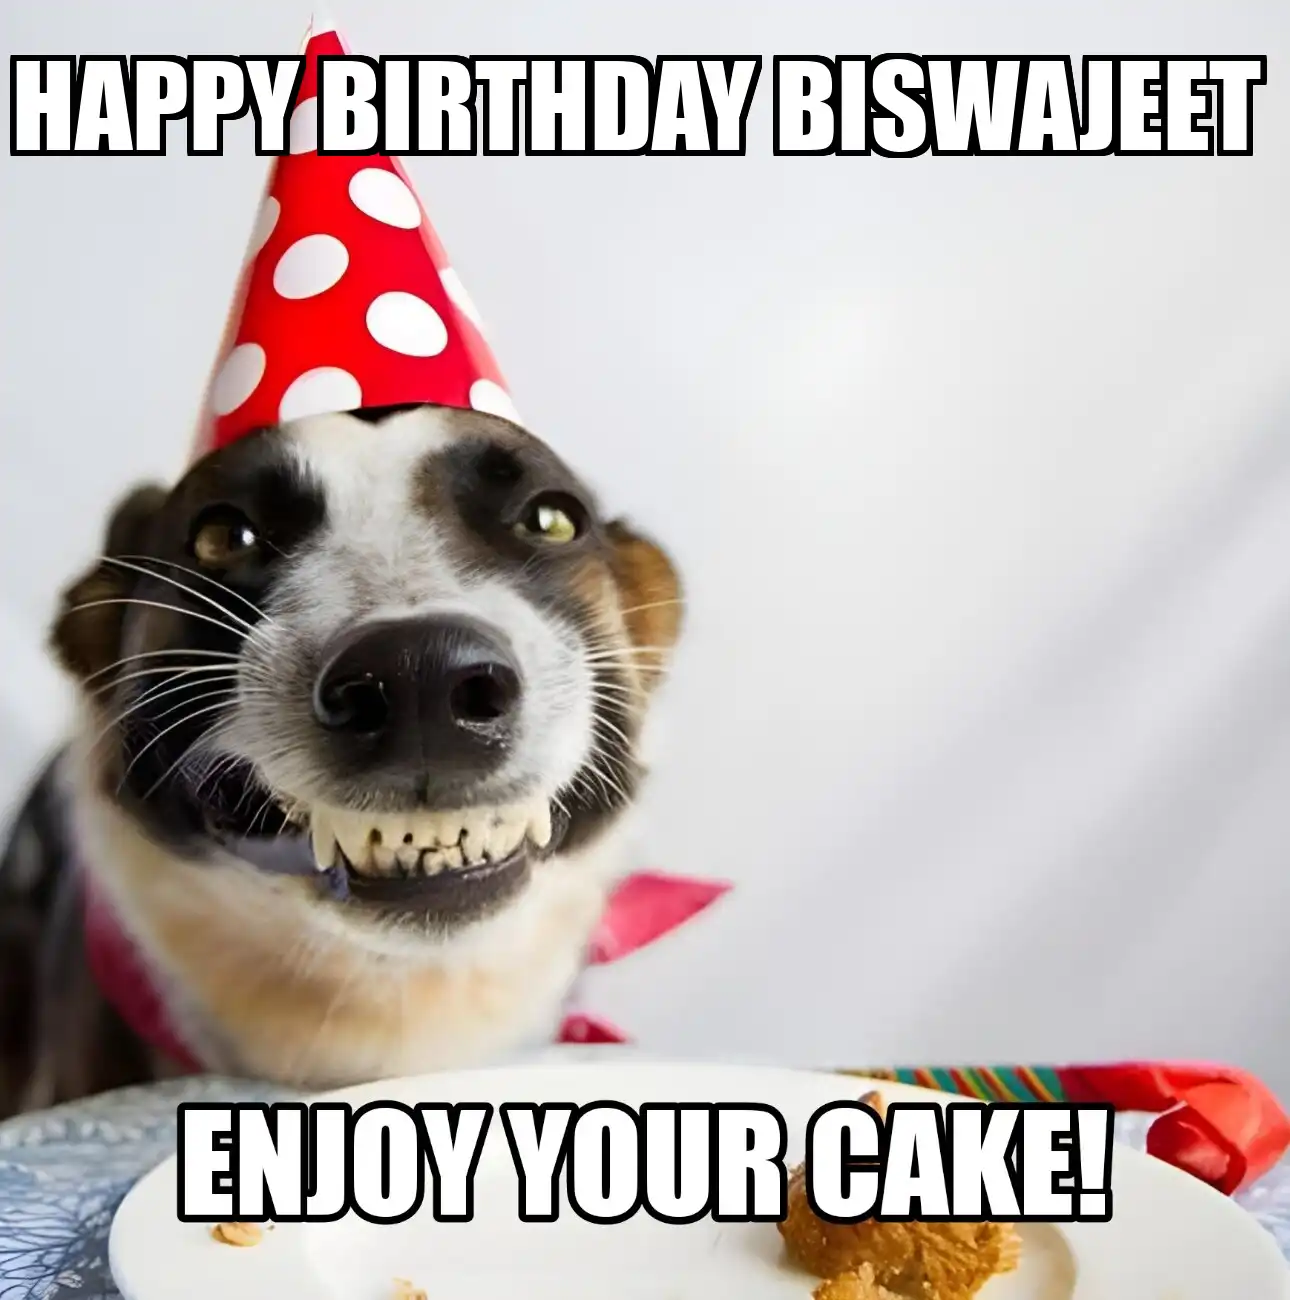 Happy Birthday Biswajeet Enjoy Your Cake Dog Meme